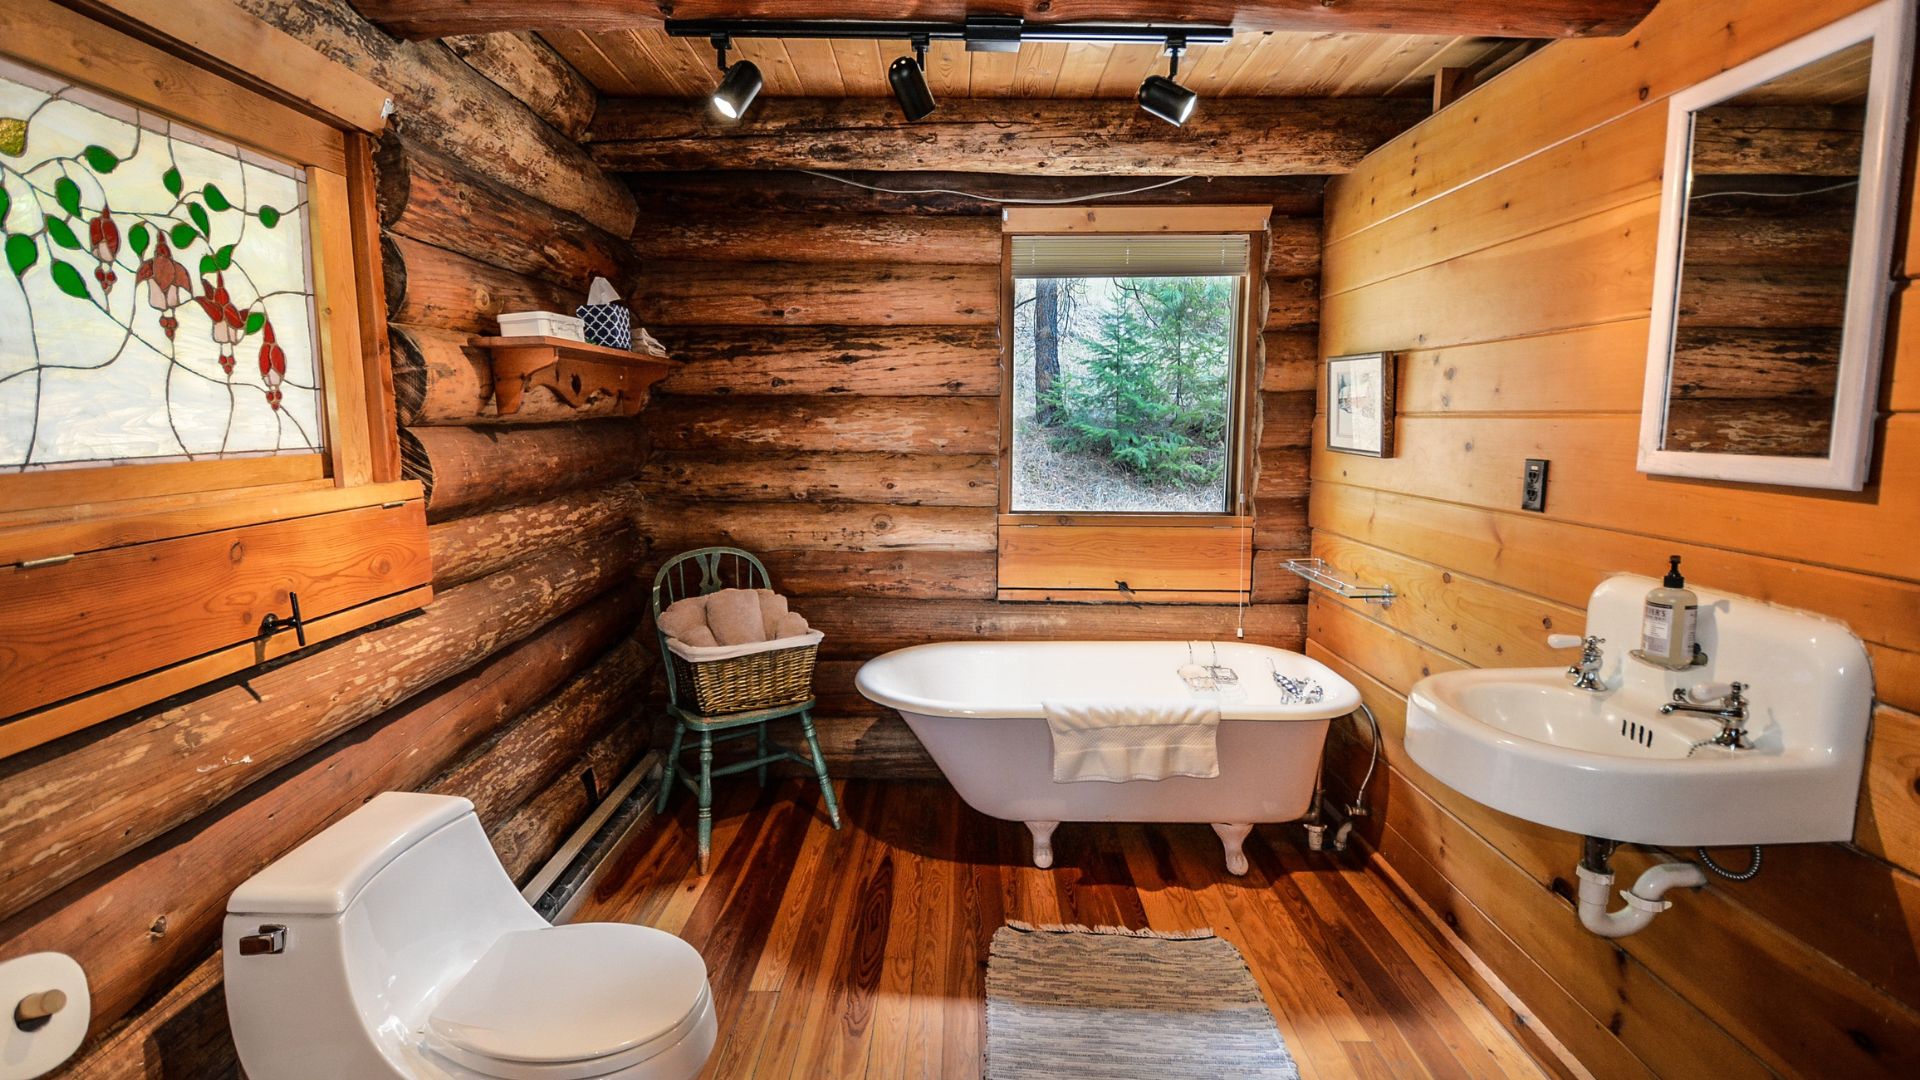 Farmhouse bathroom style with tub, sink, and toilet